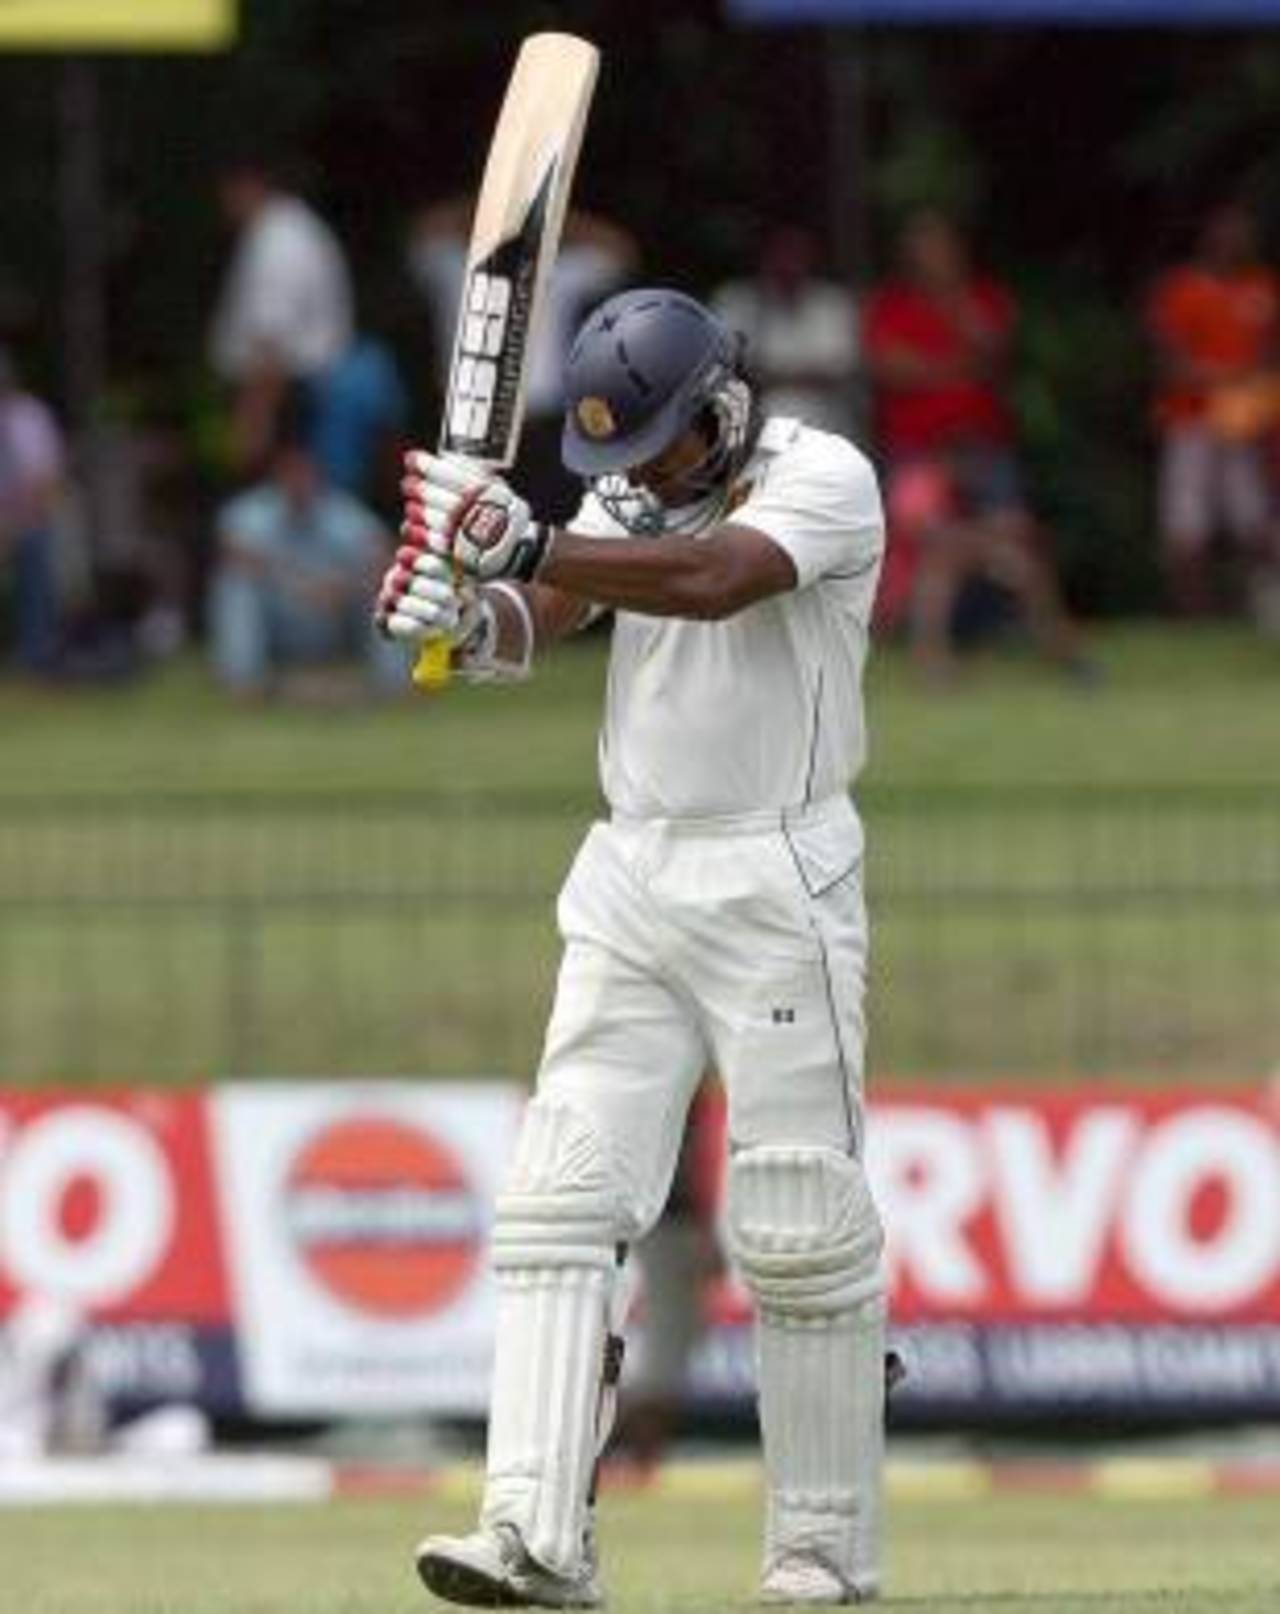 Kumar Sangakkara reacts after missing out on a double-century, Sri Lanka v Pakistan, 2nd Test, SSC, Colombo, 5th day, July 4, 2012